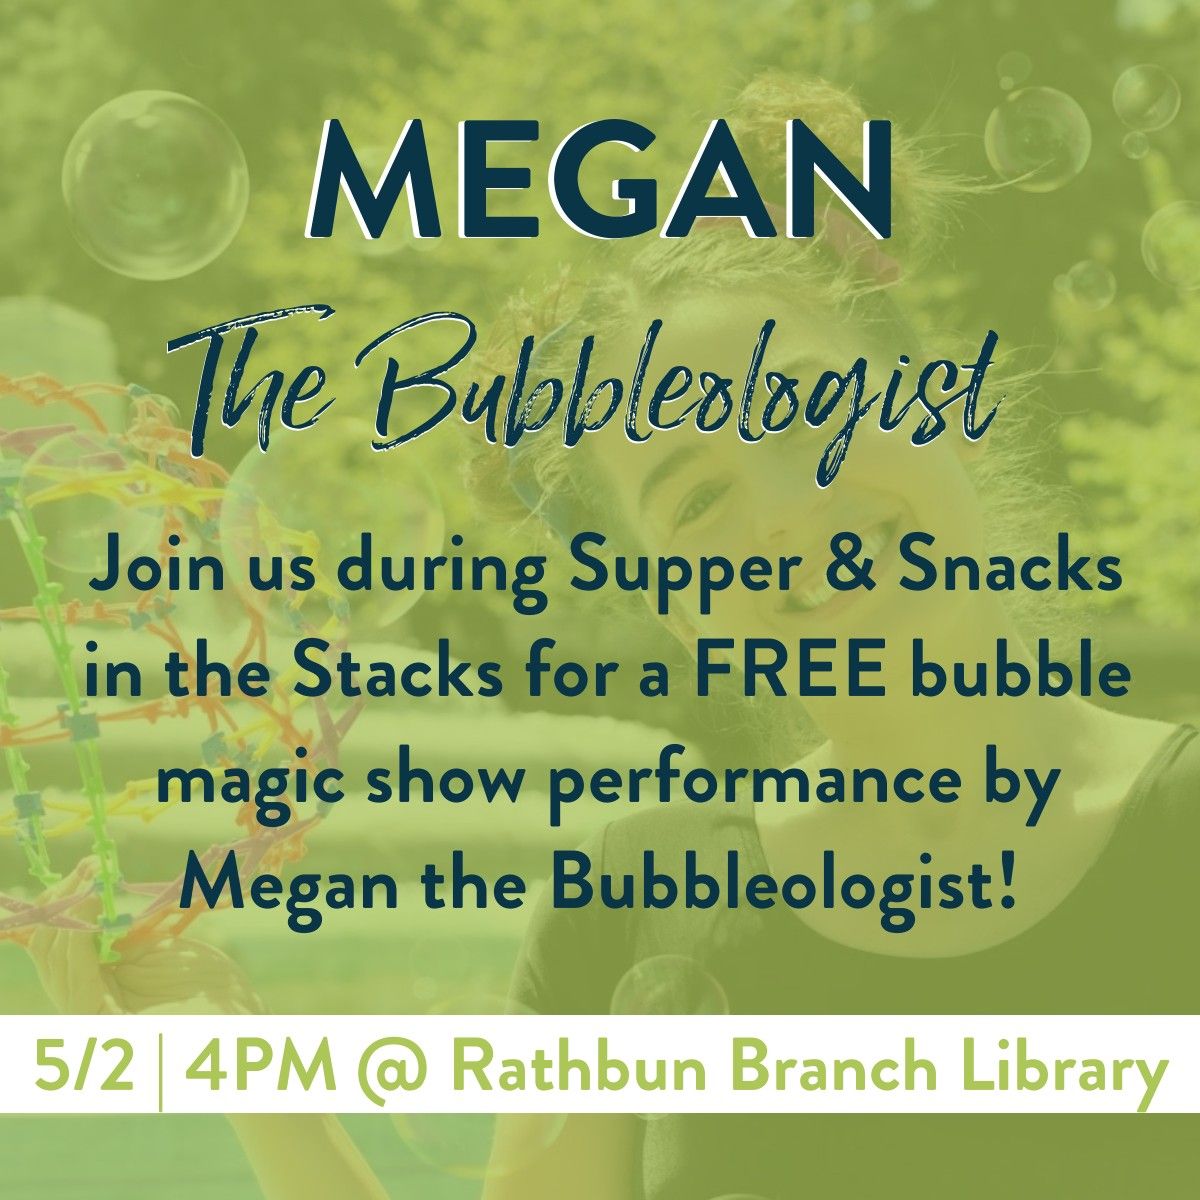 Megan the Bubbleologist! - FREE EVENT